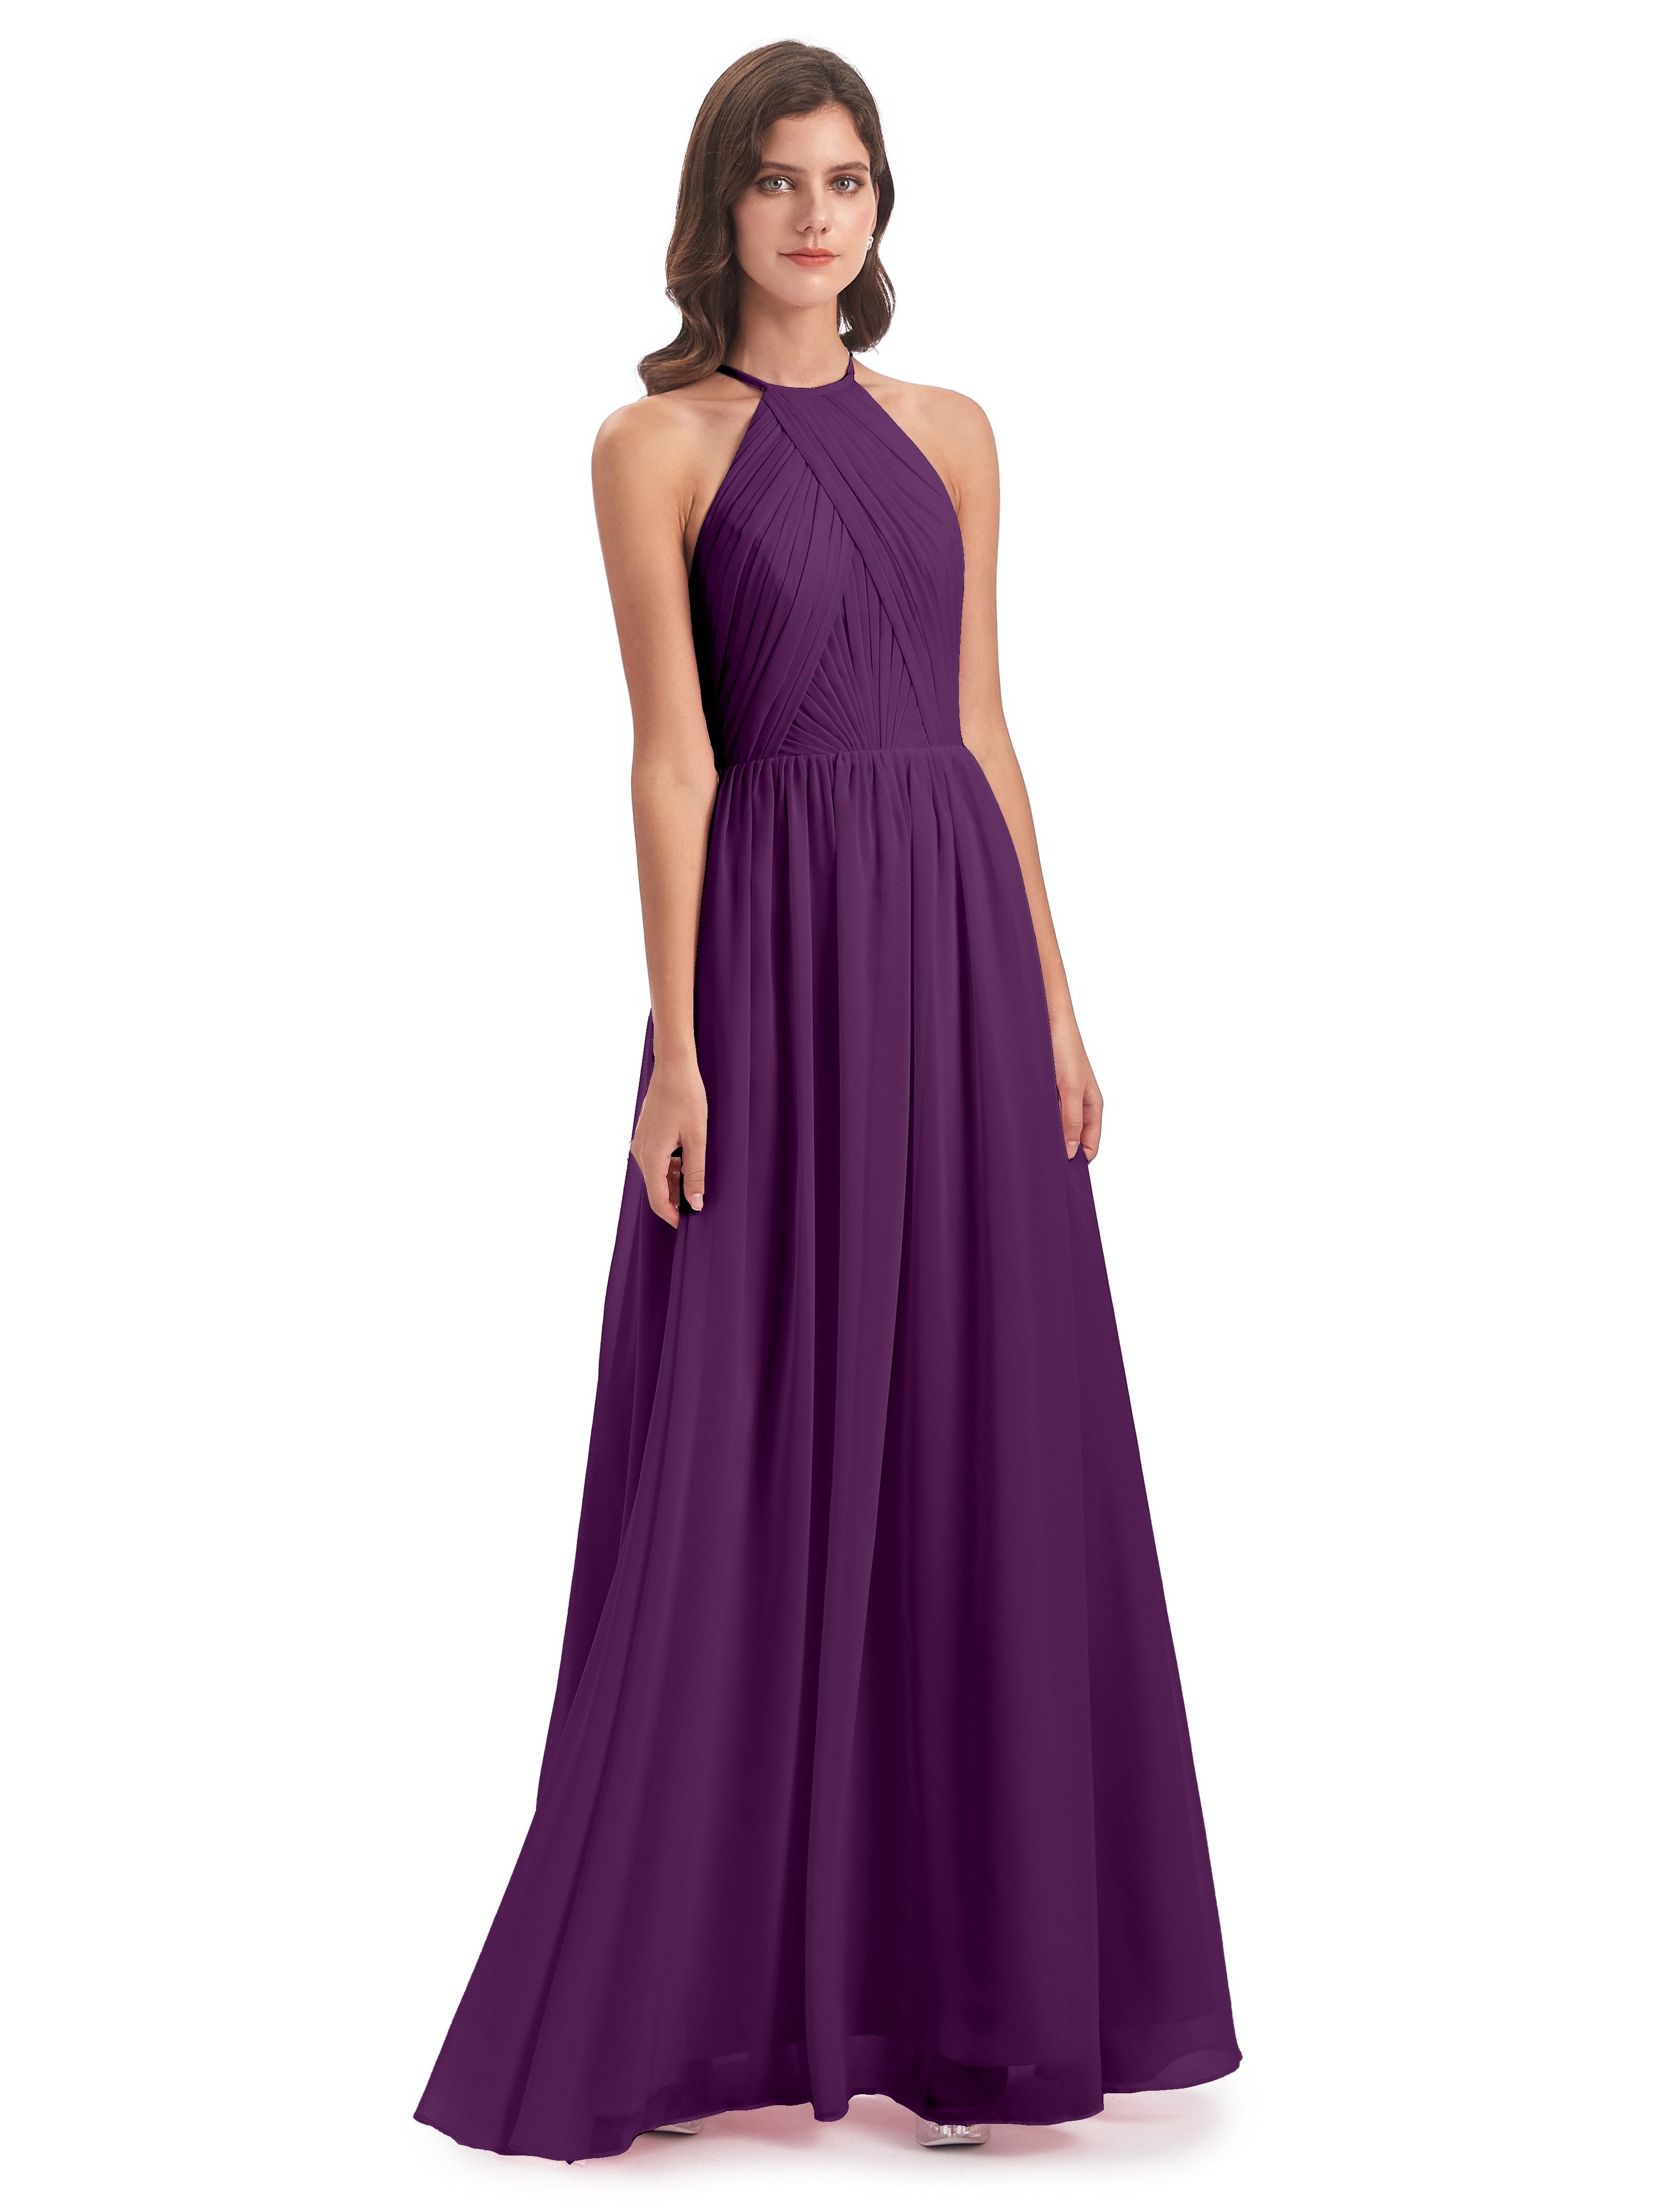 60+ Colors: Grape Bridesmaid Dresses (FREE Custom Size)-Cicinia